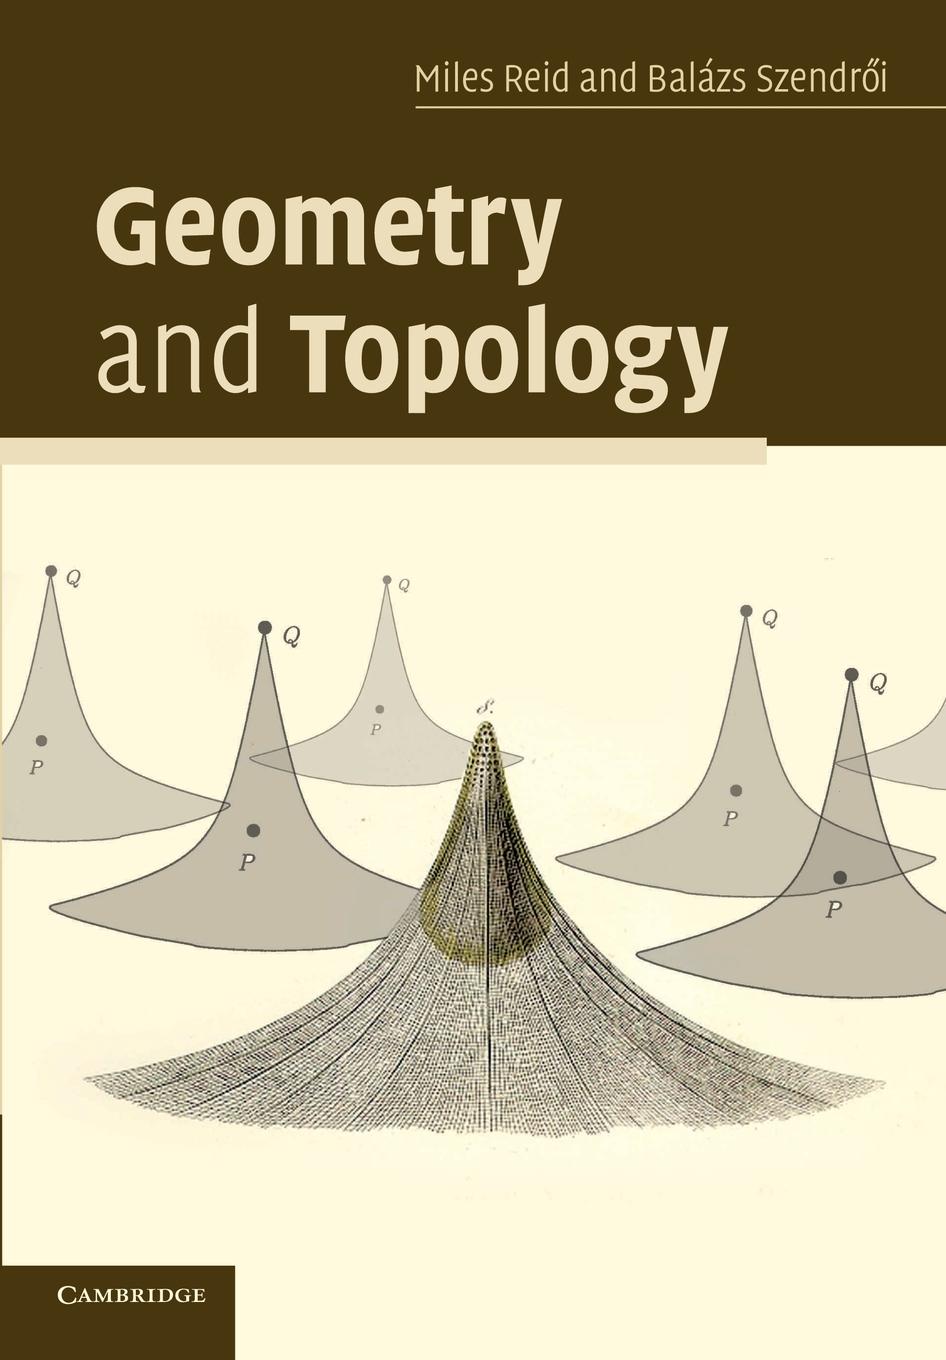 Geometry and Topology / Balazs Szendroi / Taschenbuch / Paperback / Kartoniert / Broschiert / Englisch / 2014 / Cambridge University Press / EAN 9780521613255 - Szendroi, Balazs